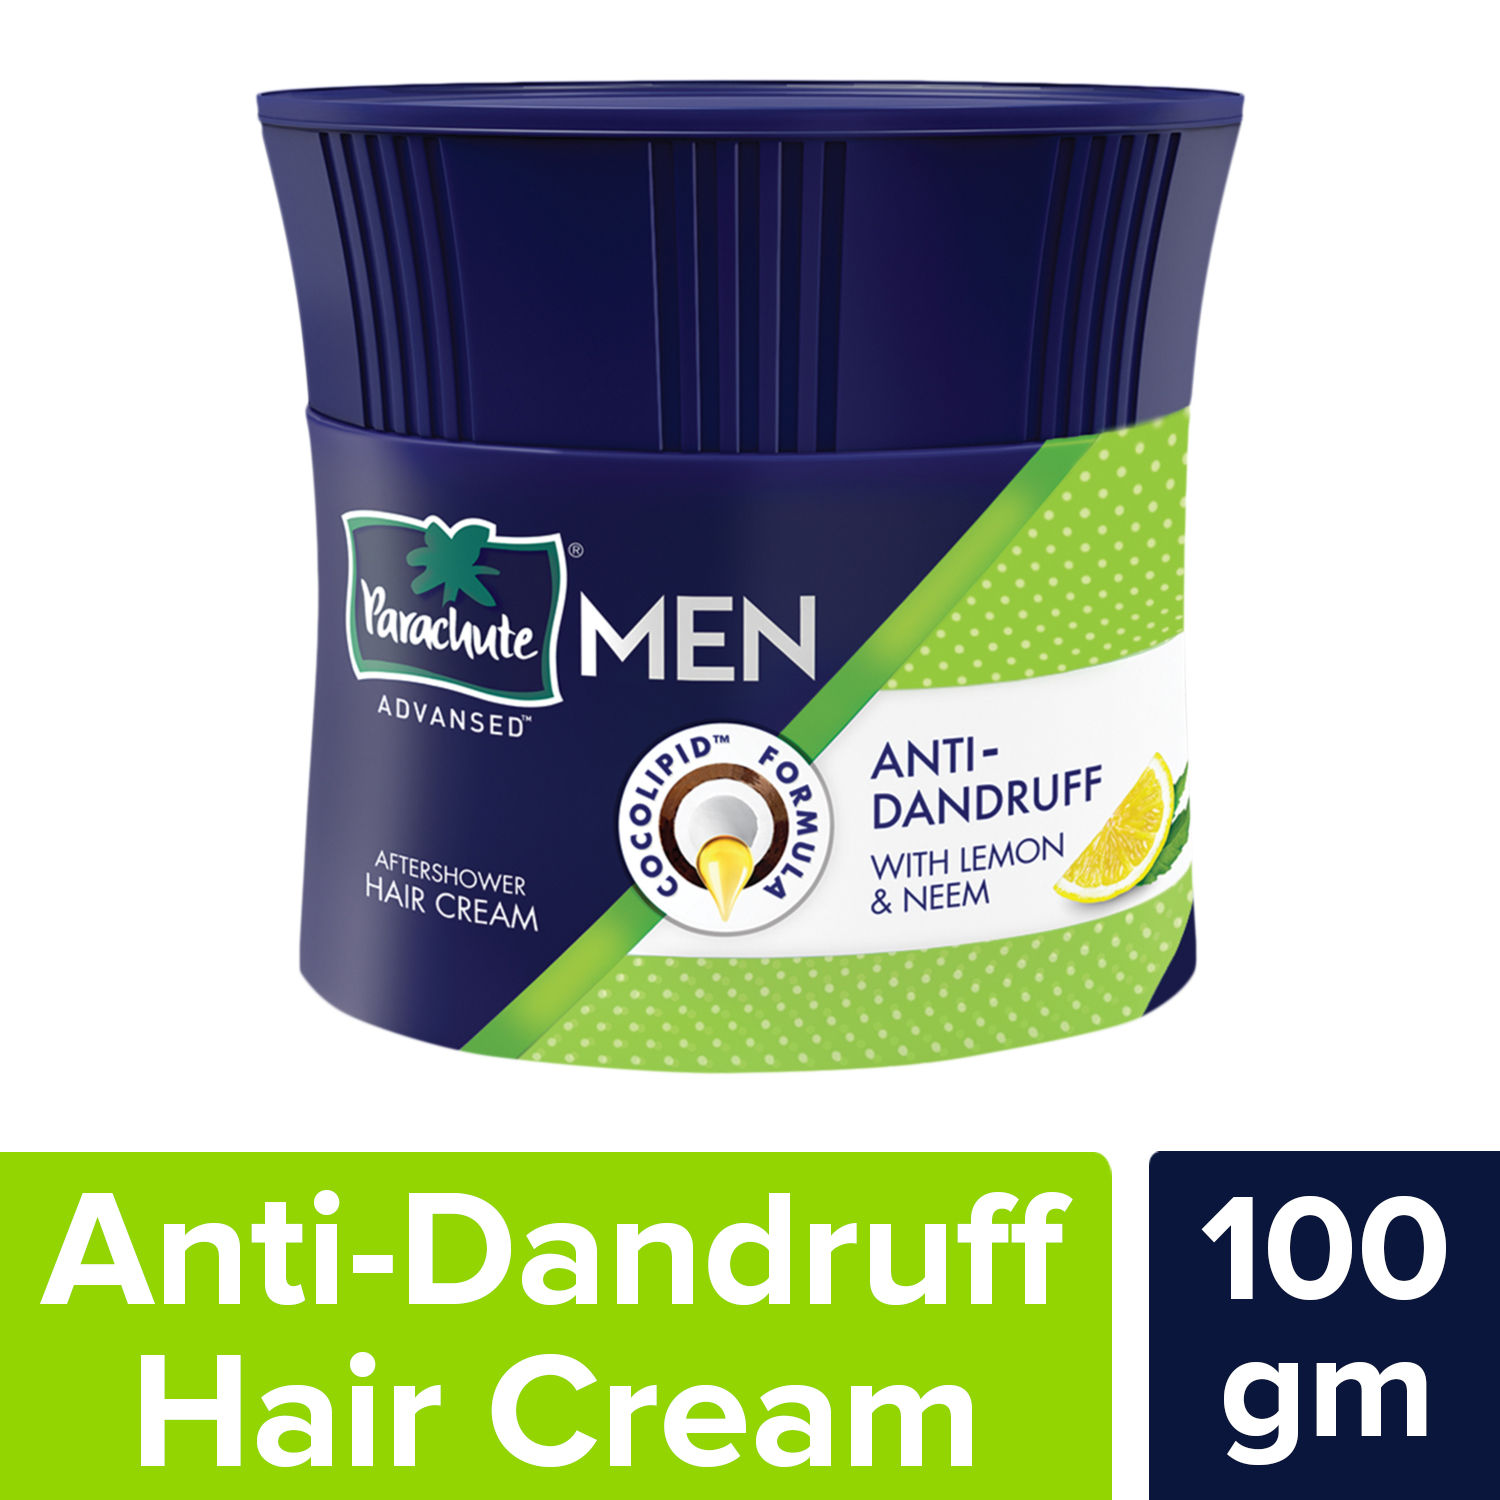 Parachute Advansed Aftershower Anti-Dandruff Hair Cream